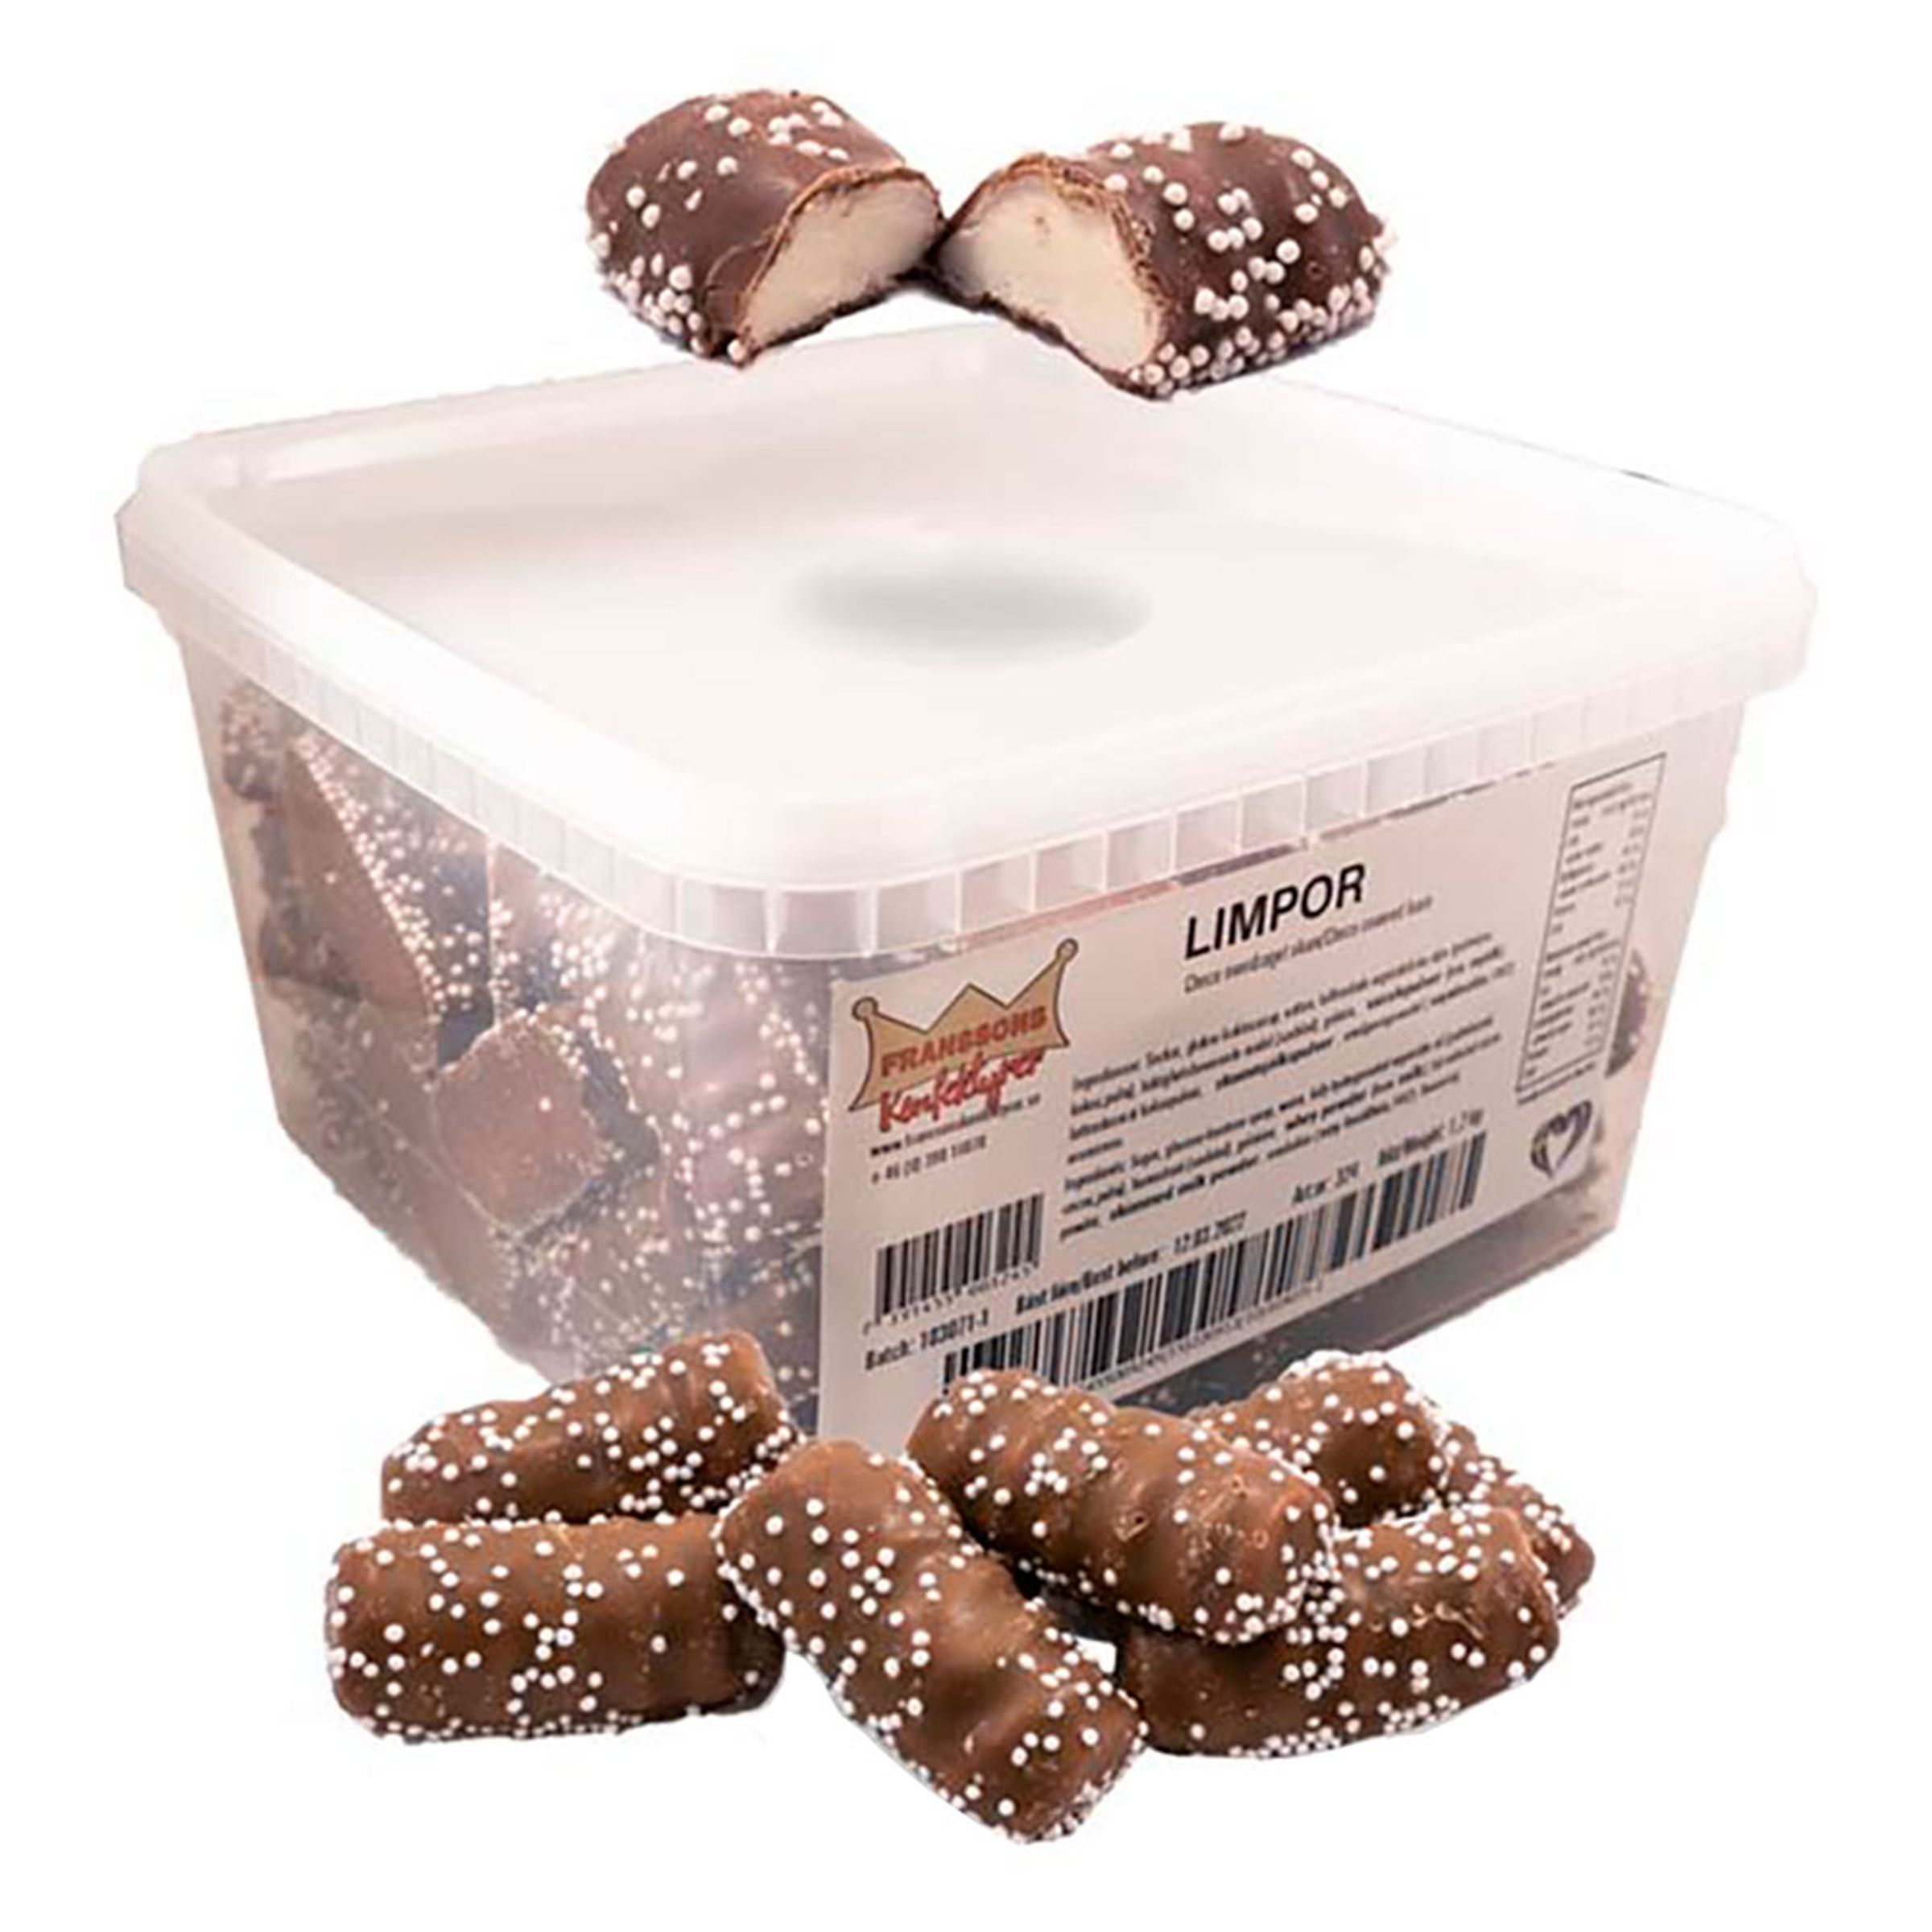 Chokladlimpor Vaniljskum Storpack - 1,2 kg